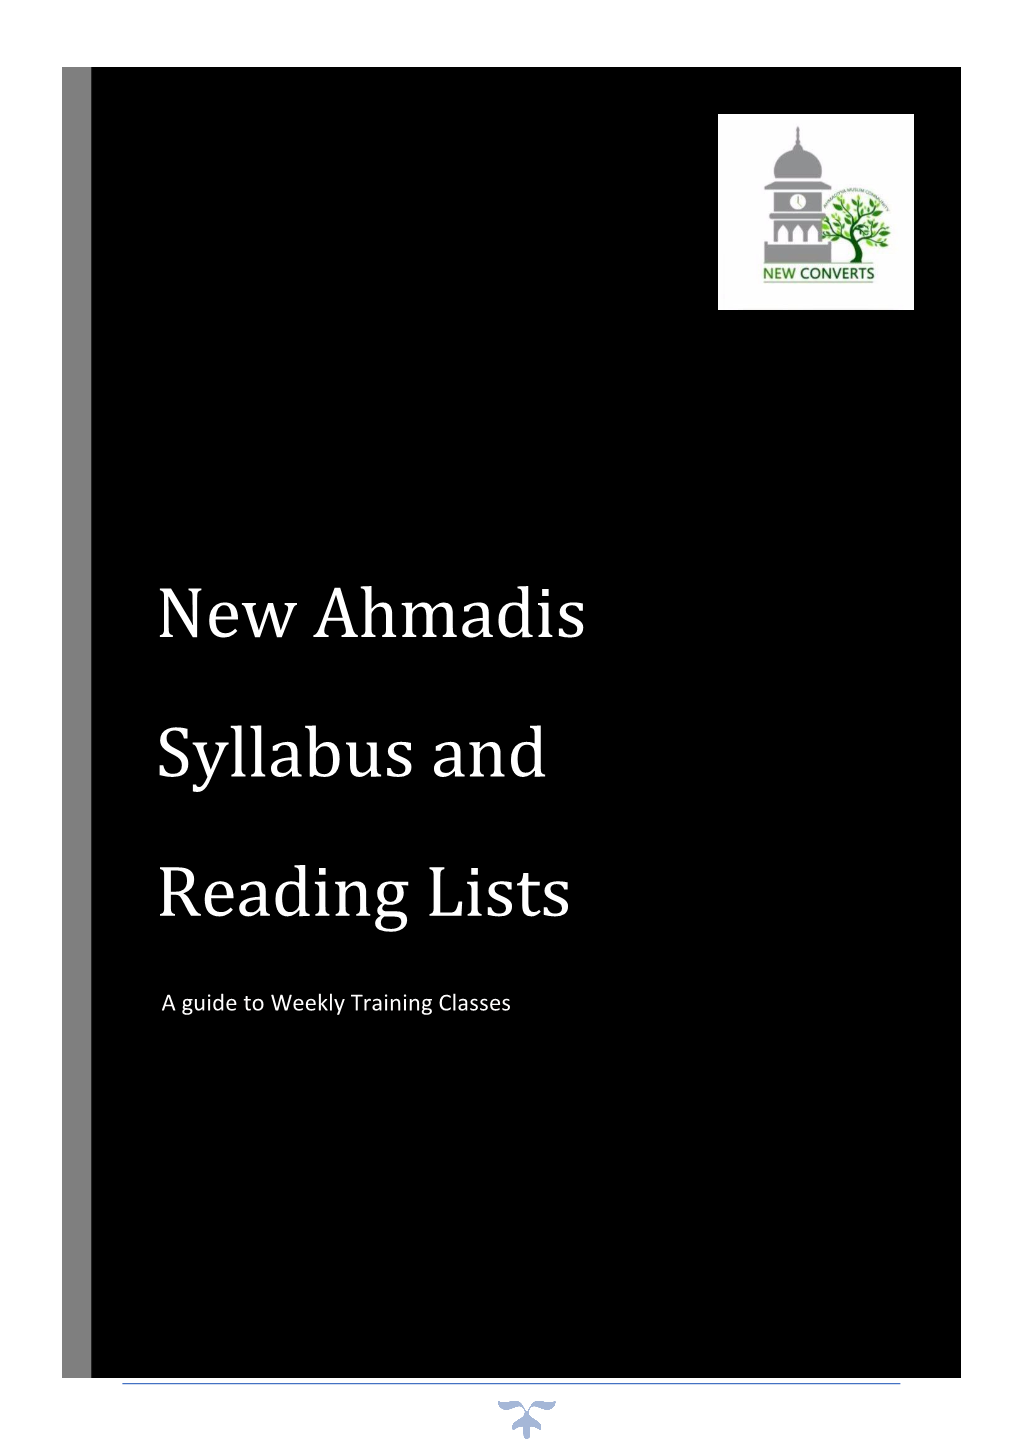 New Ahmadis Syllabus and Reading Lists